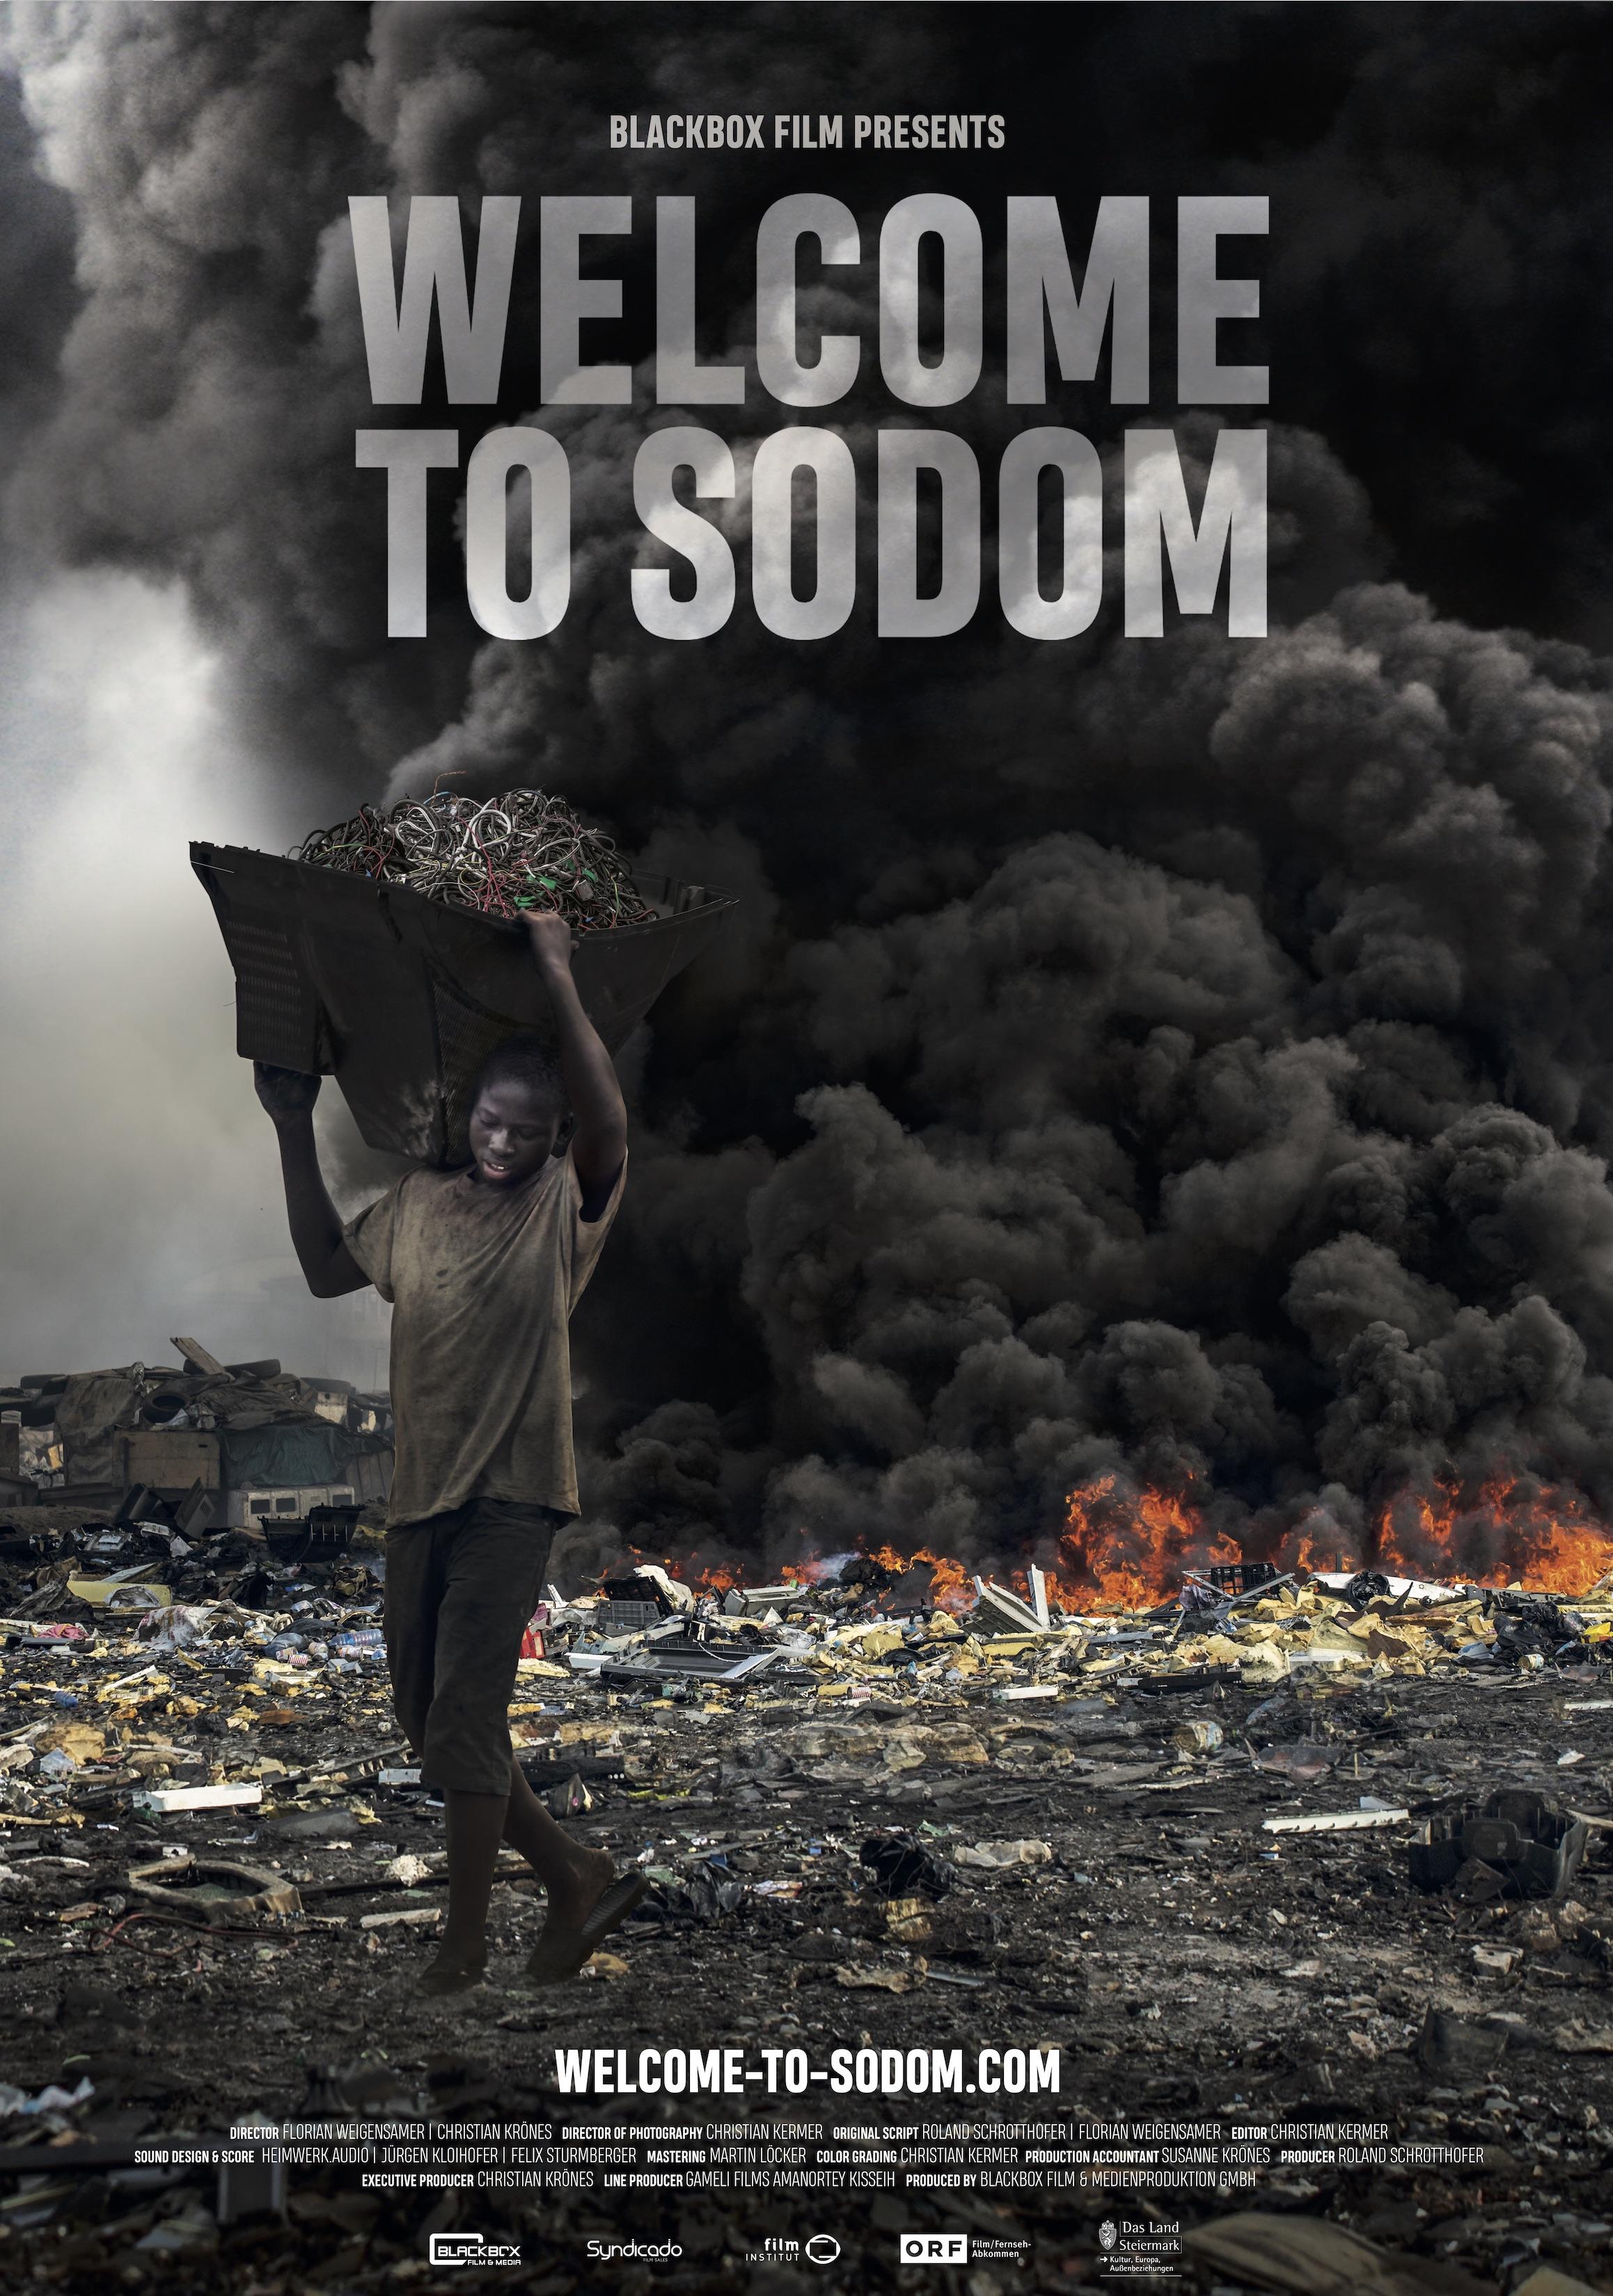 Nonton film Welcome to Sodom layarkaca21 indoxx1 ganool online streaming terbaru